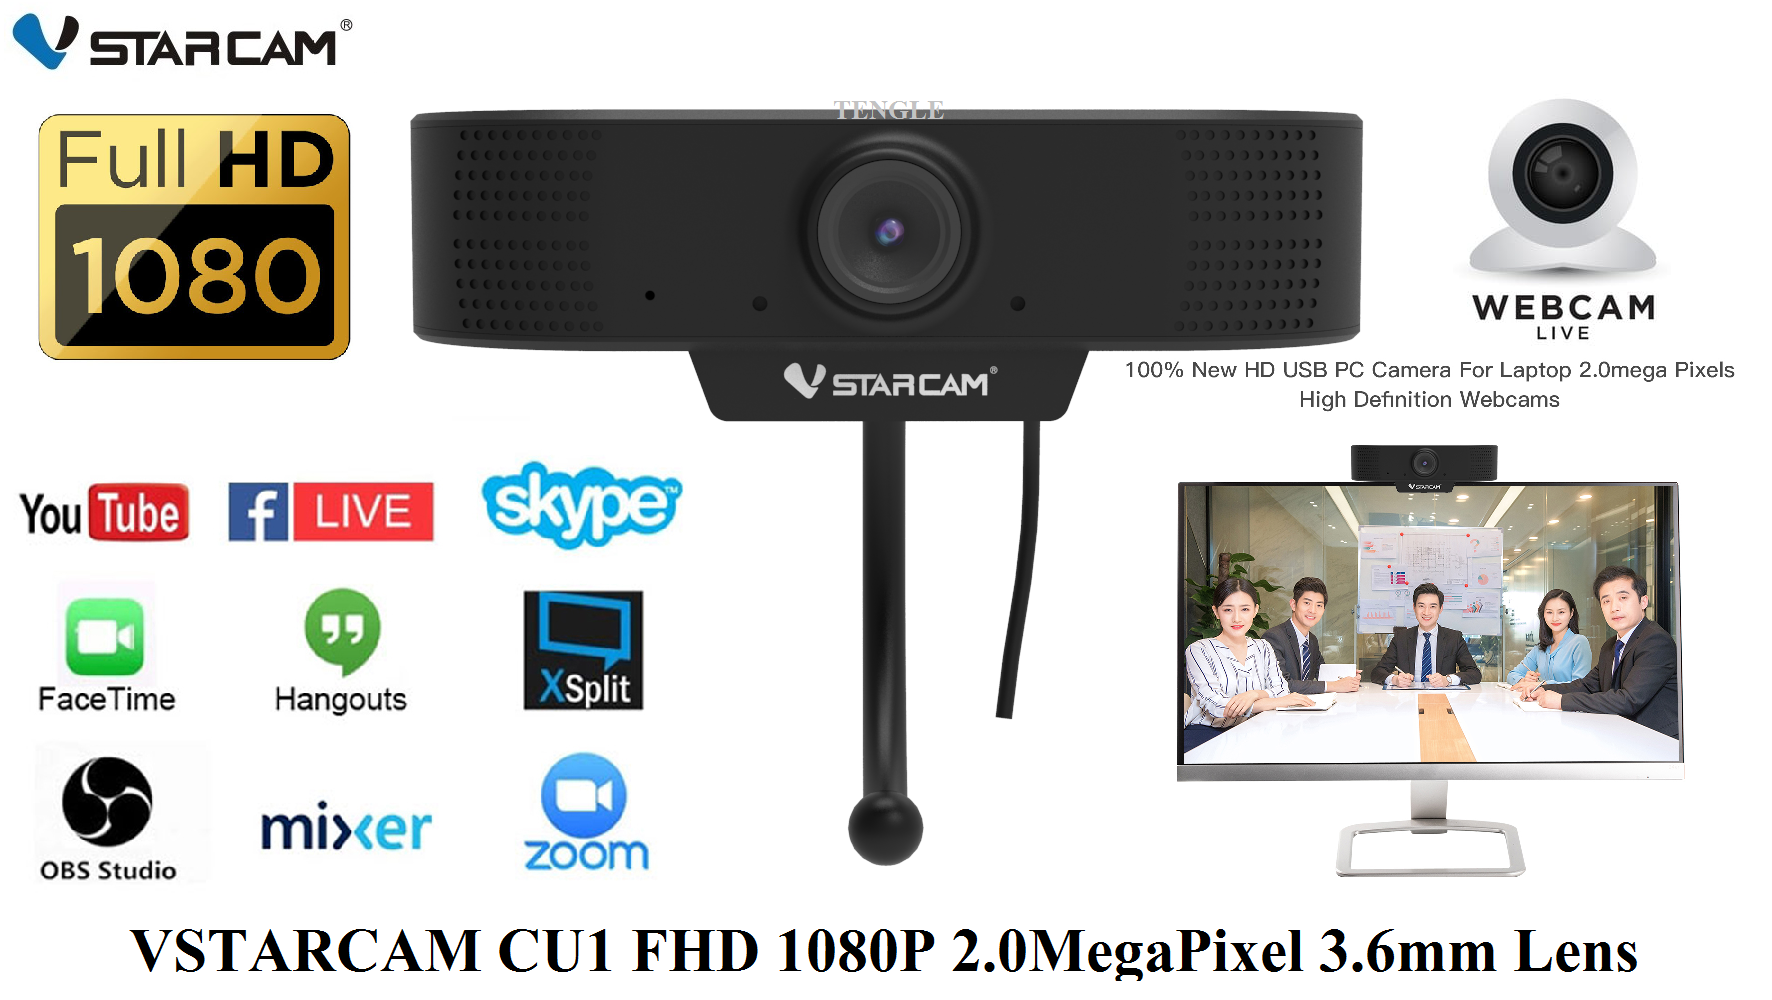 VSTARCAM CU1 FHD 1080P 2.0MegaPixel USB WebCam กล้องคอมพิวเตอร์